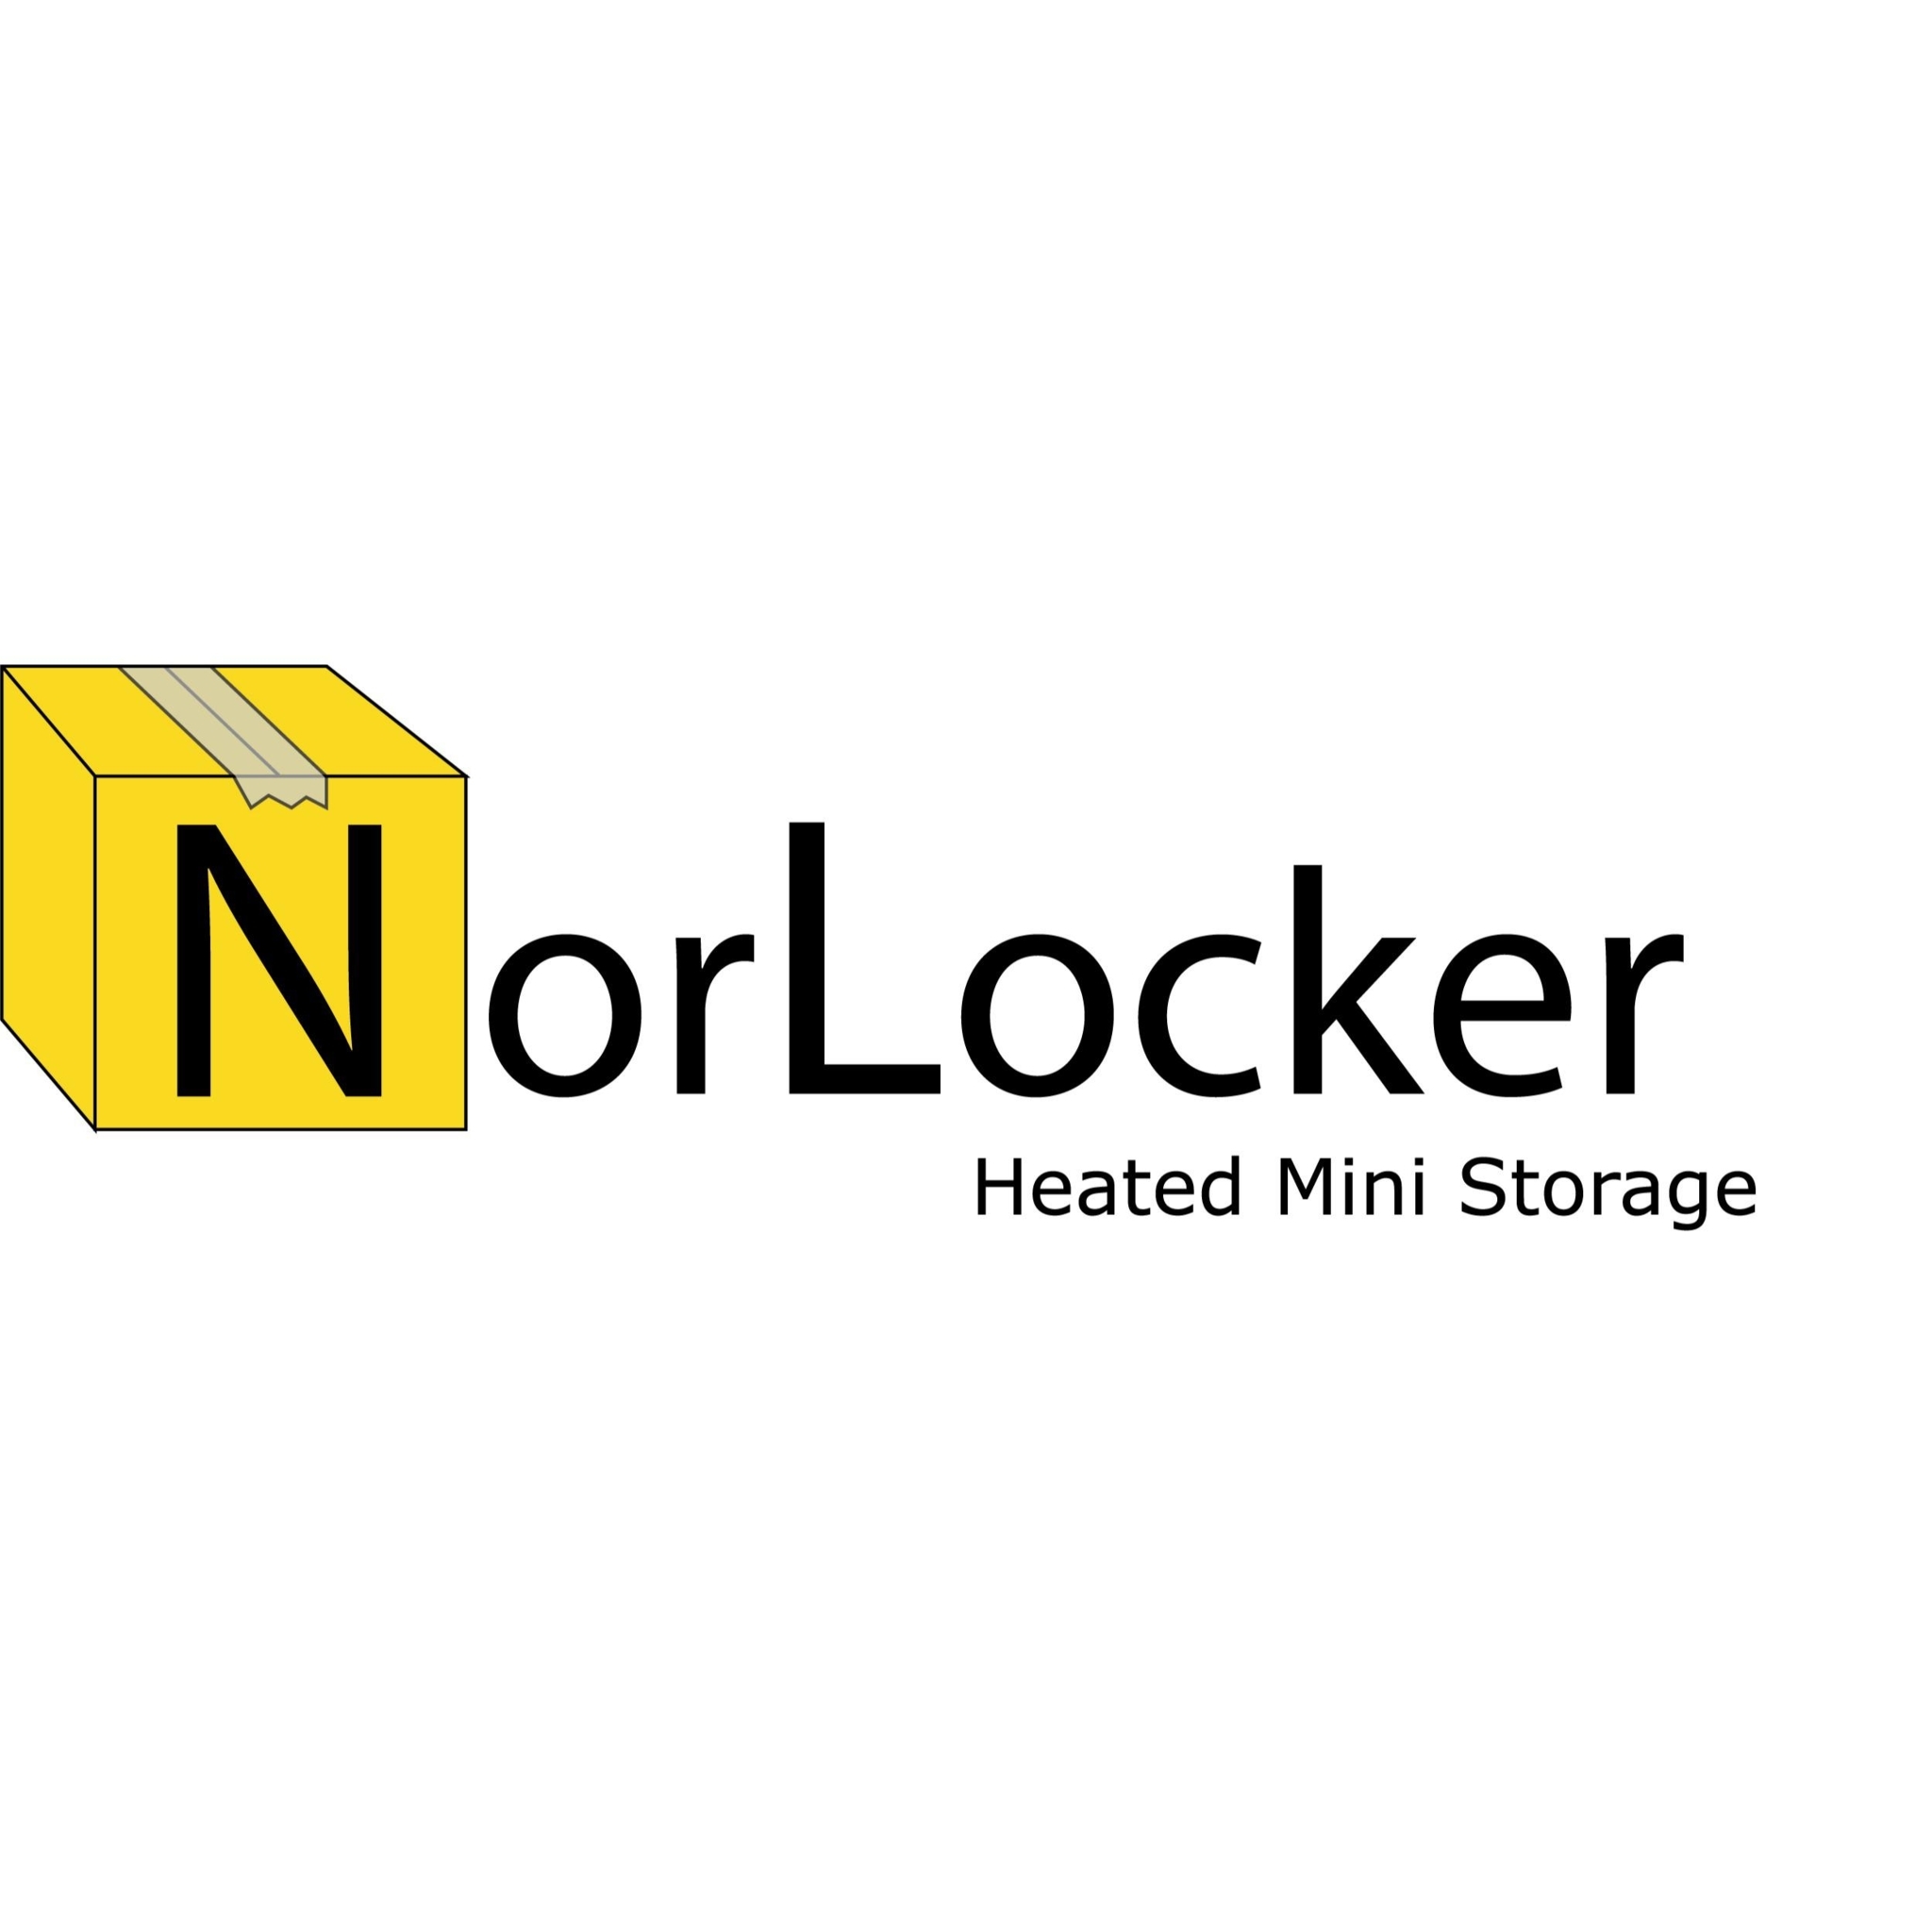 NorLocker Heated Mini Storage Ltd. - Self-Storage